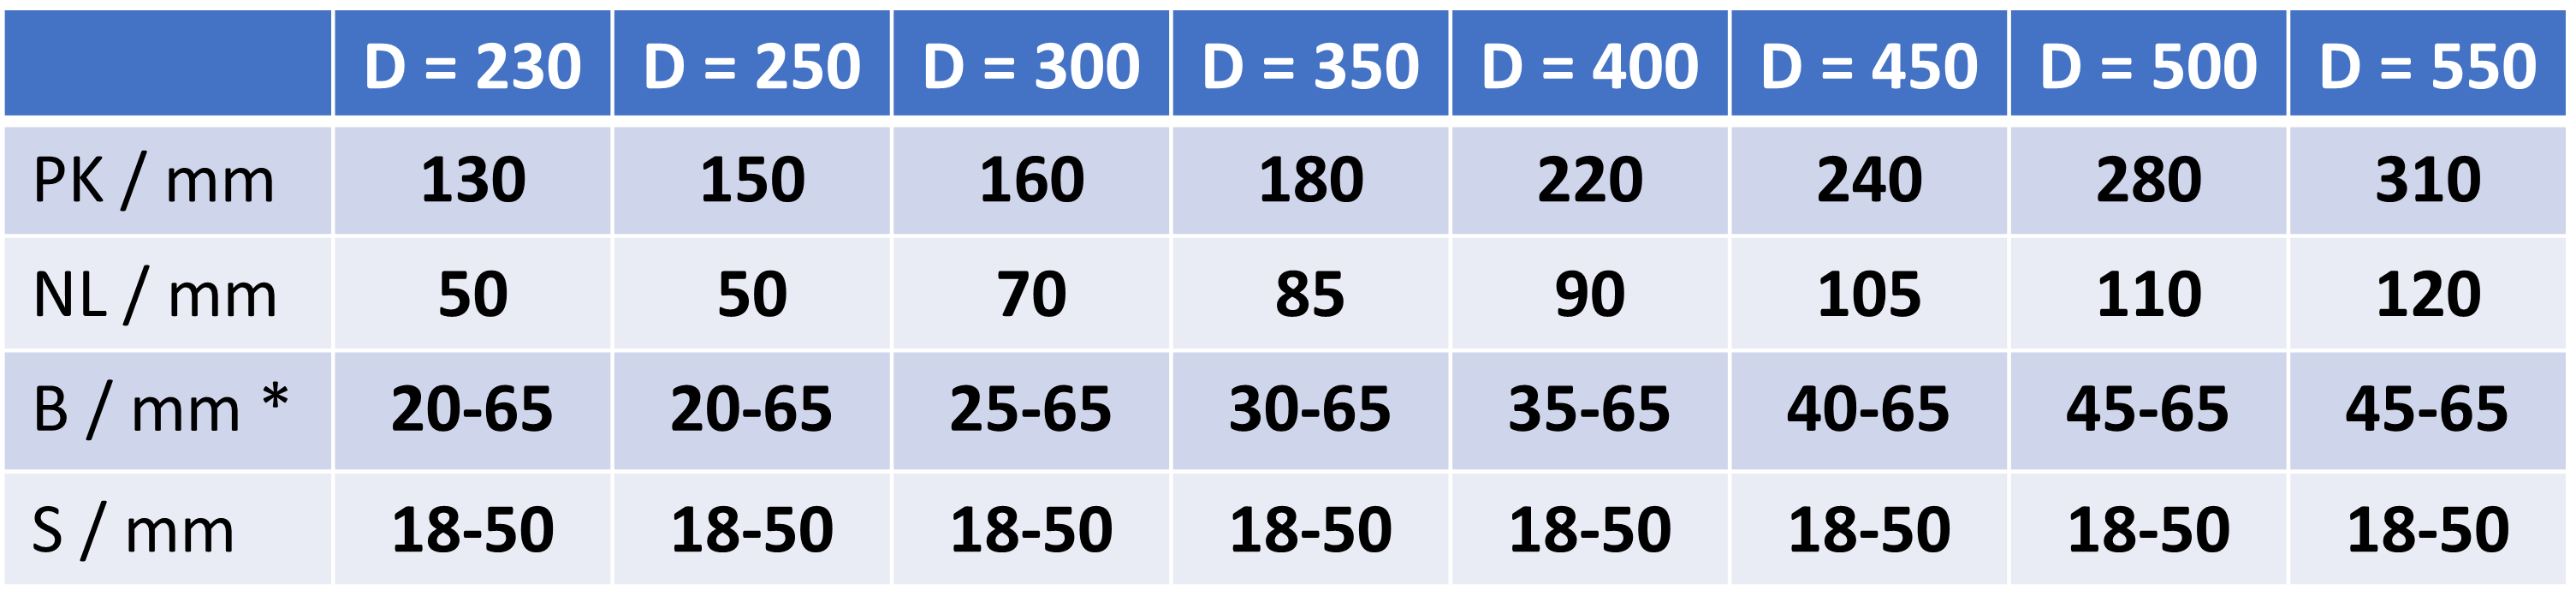 SB-XL Dimension Table